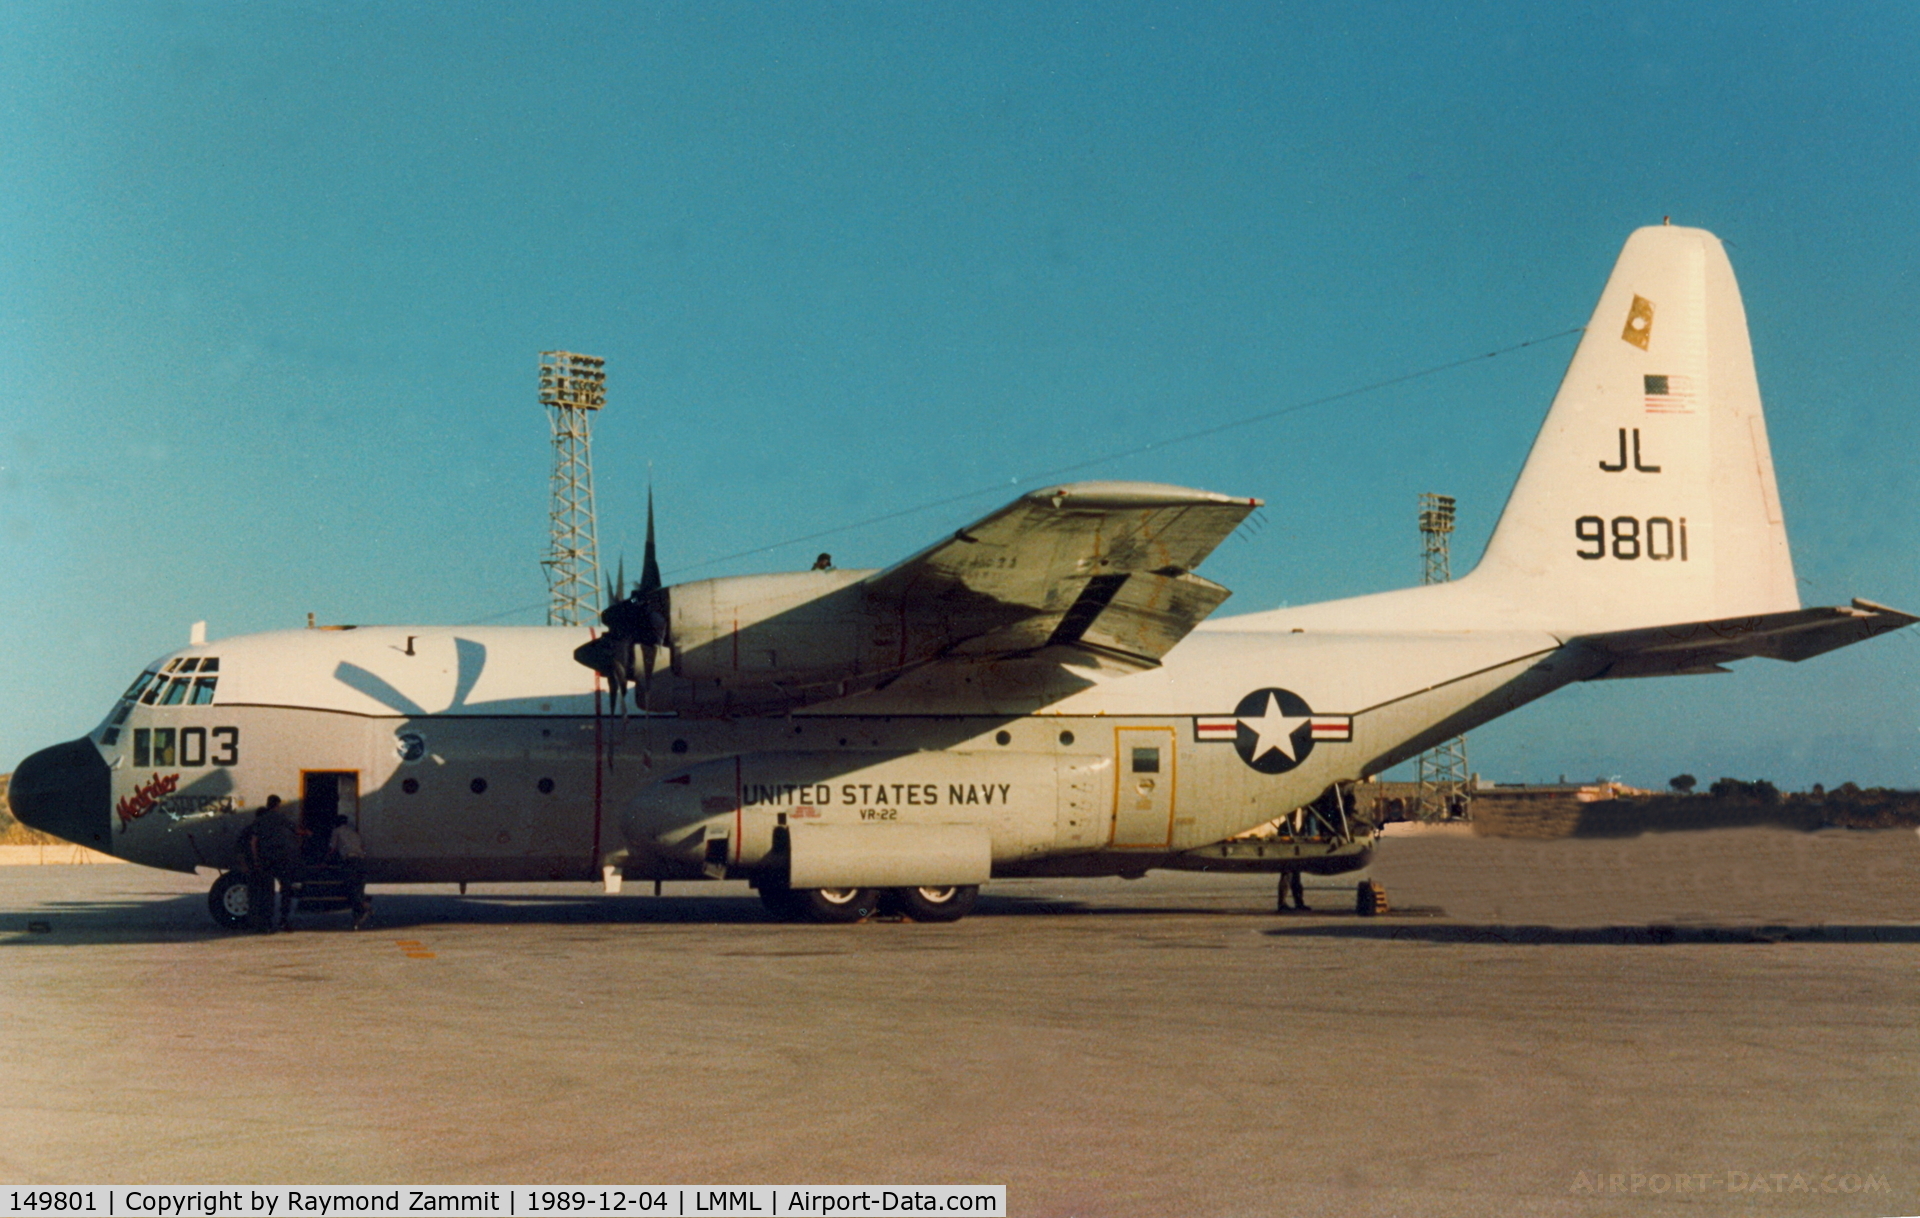 149801, Lockheed C-130F Hercules C/N 282-3686, Lockheed C-130F Hercules 149801/9801/JL United States Navy